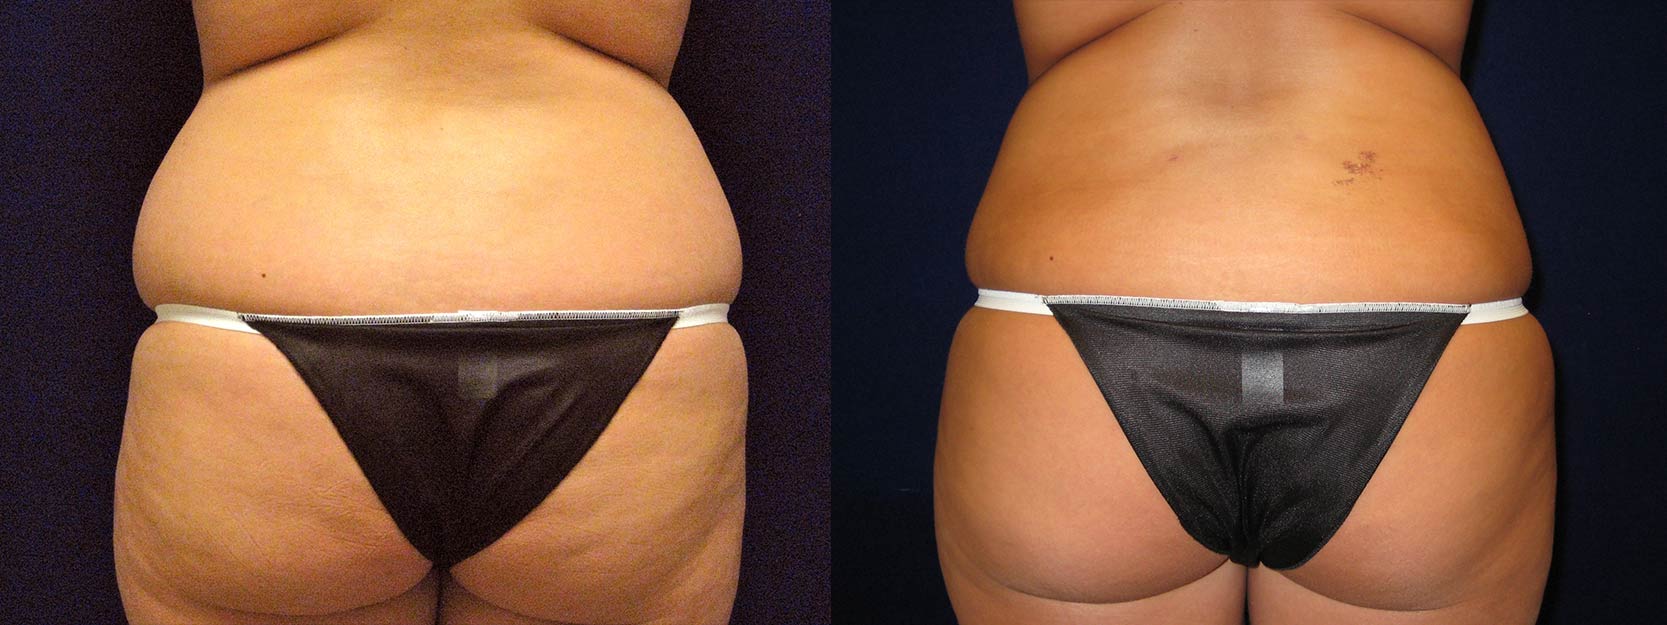 Back View - Liposuction